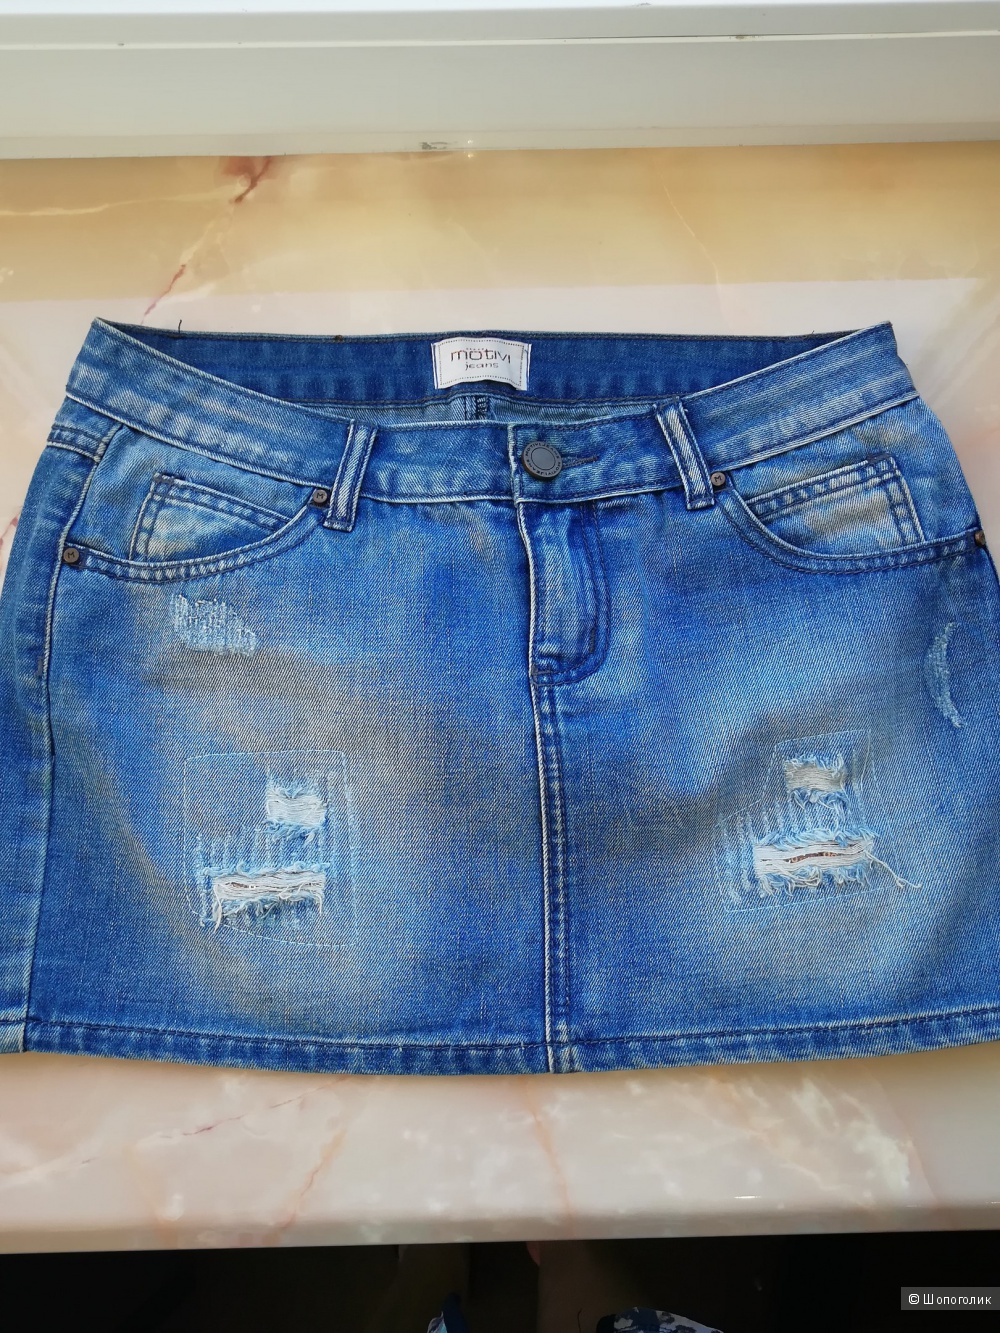 Motivi jeans юбка размер UK 10 US 6 на 44